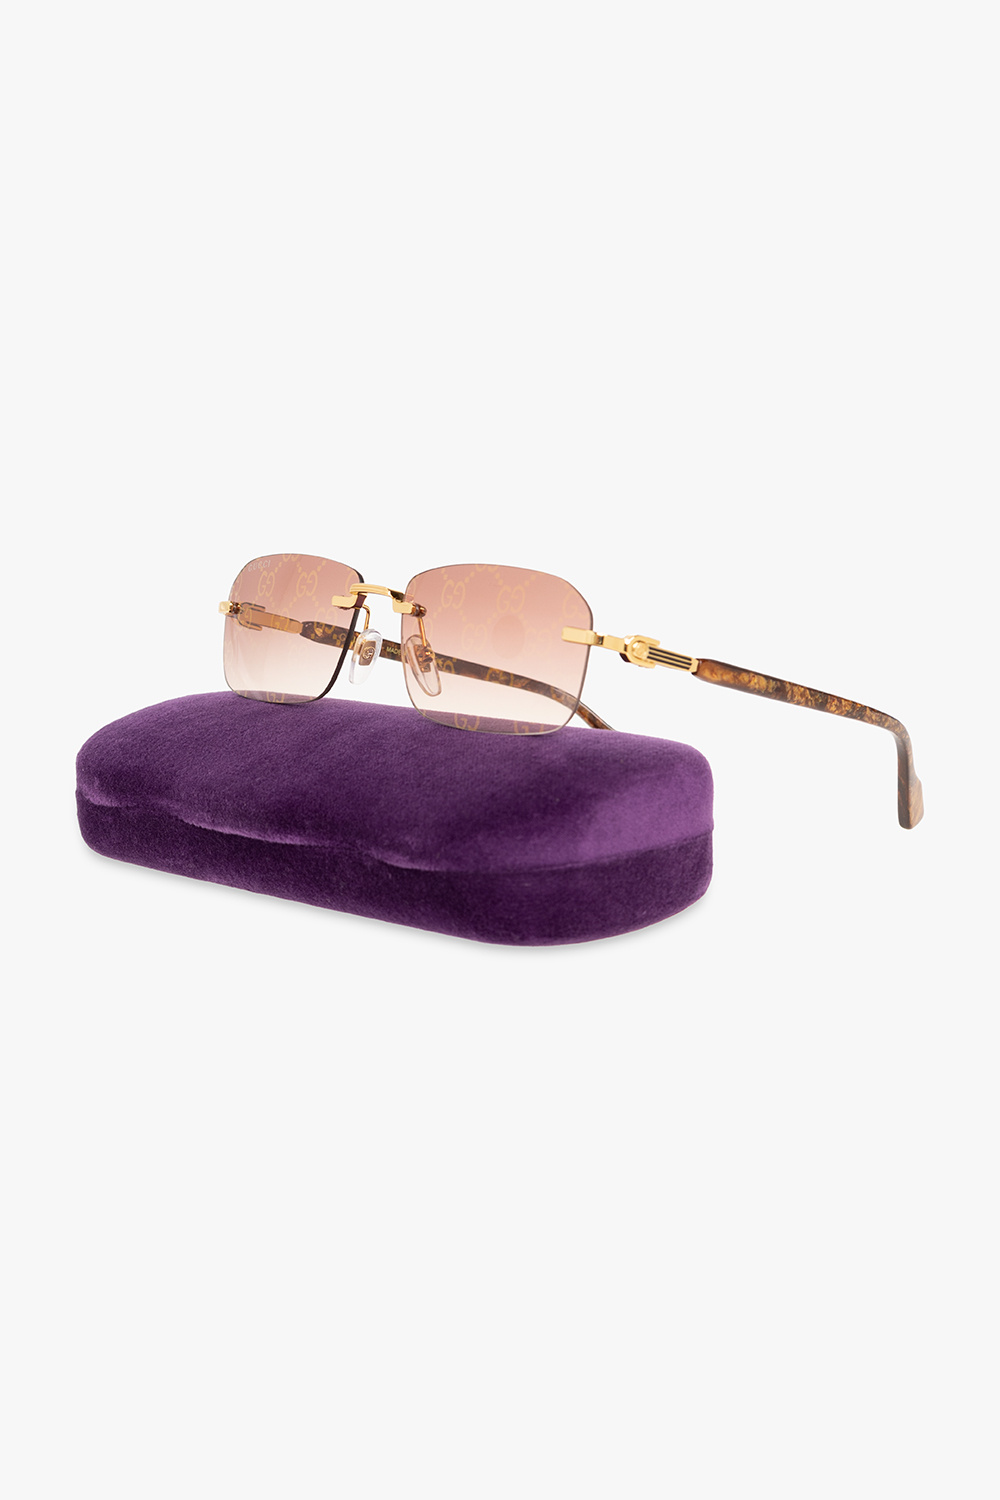 Gucci jimmy choo eyewear goldy round frame sunglasses item